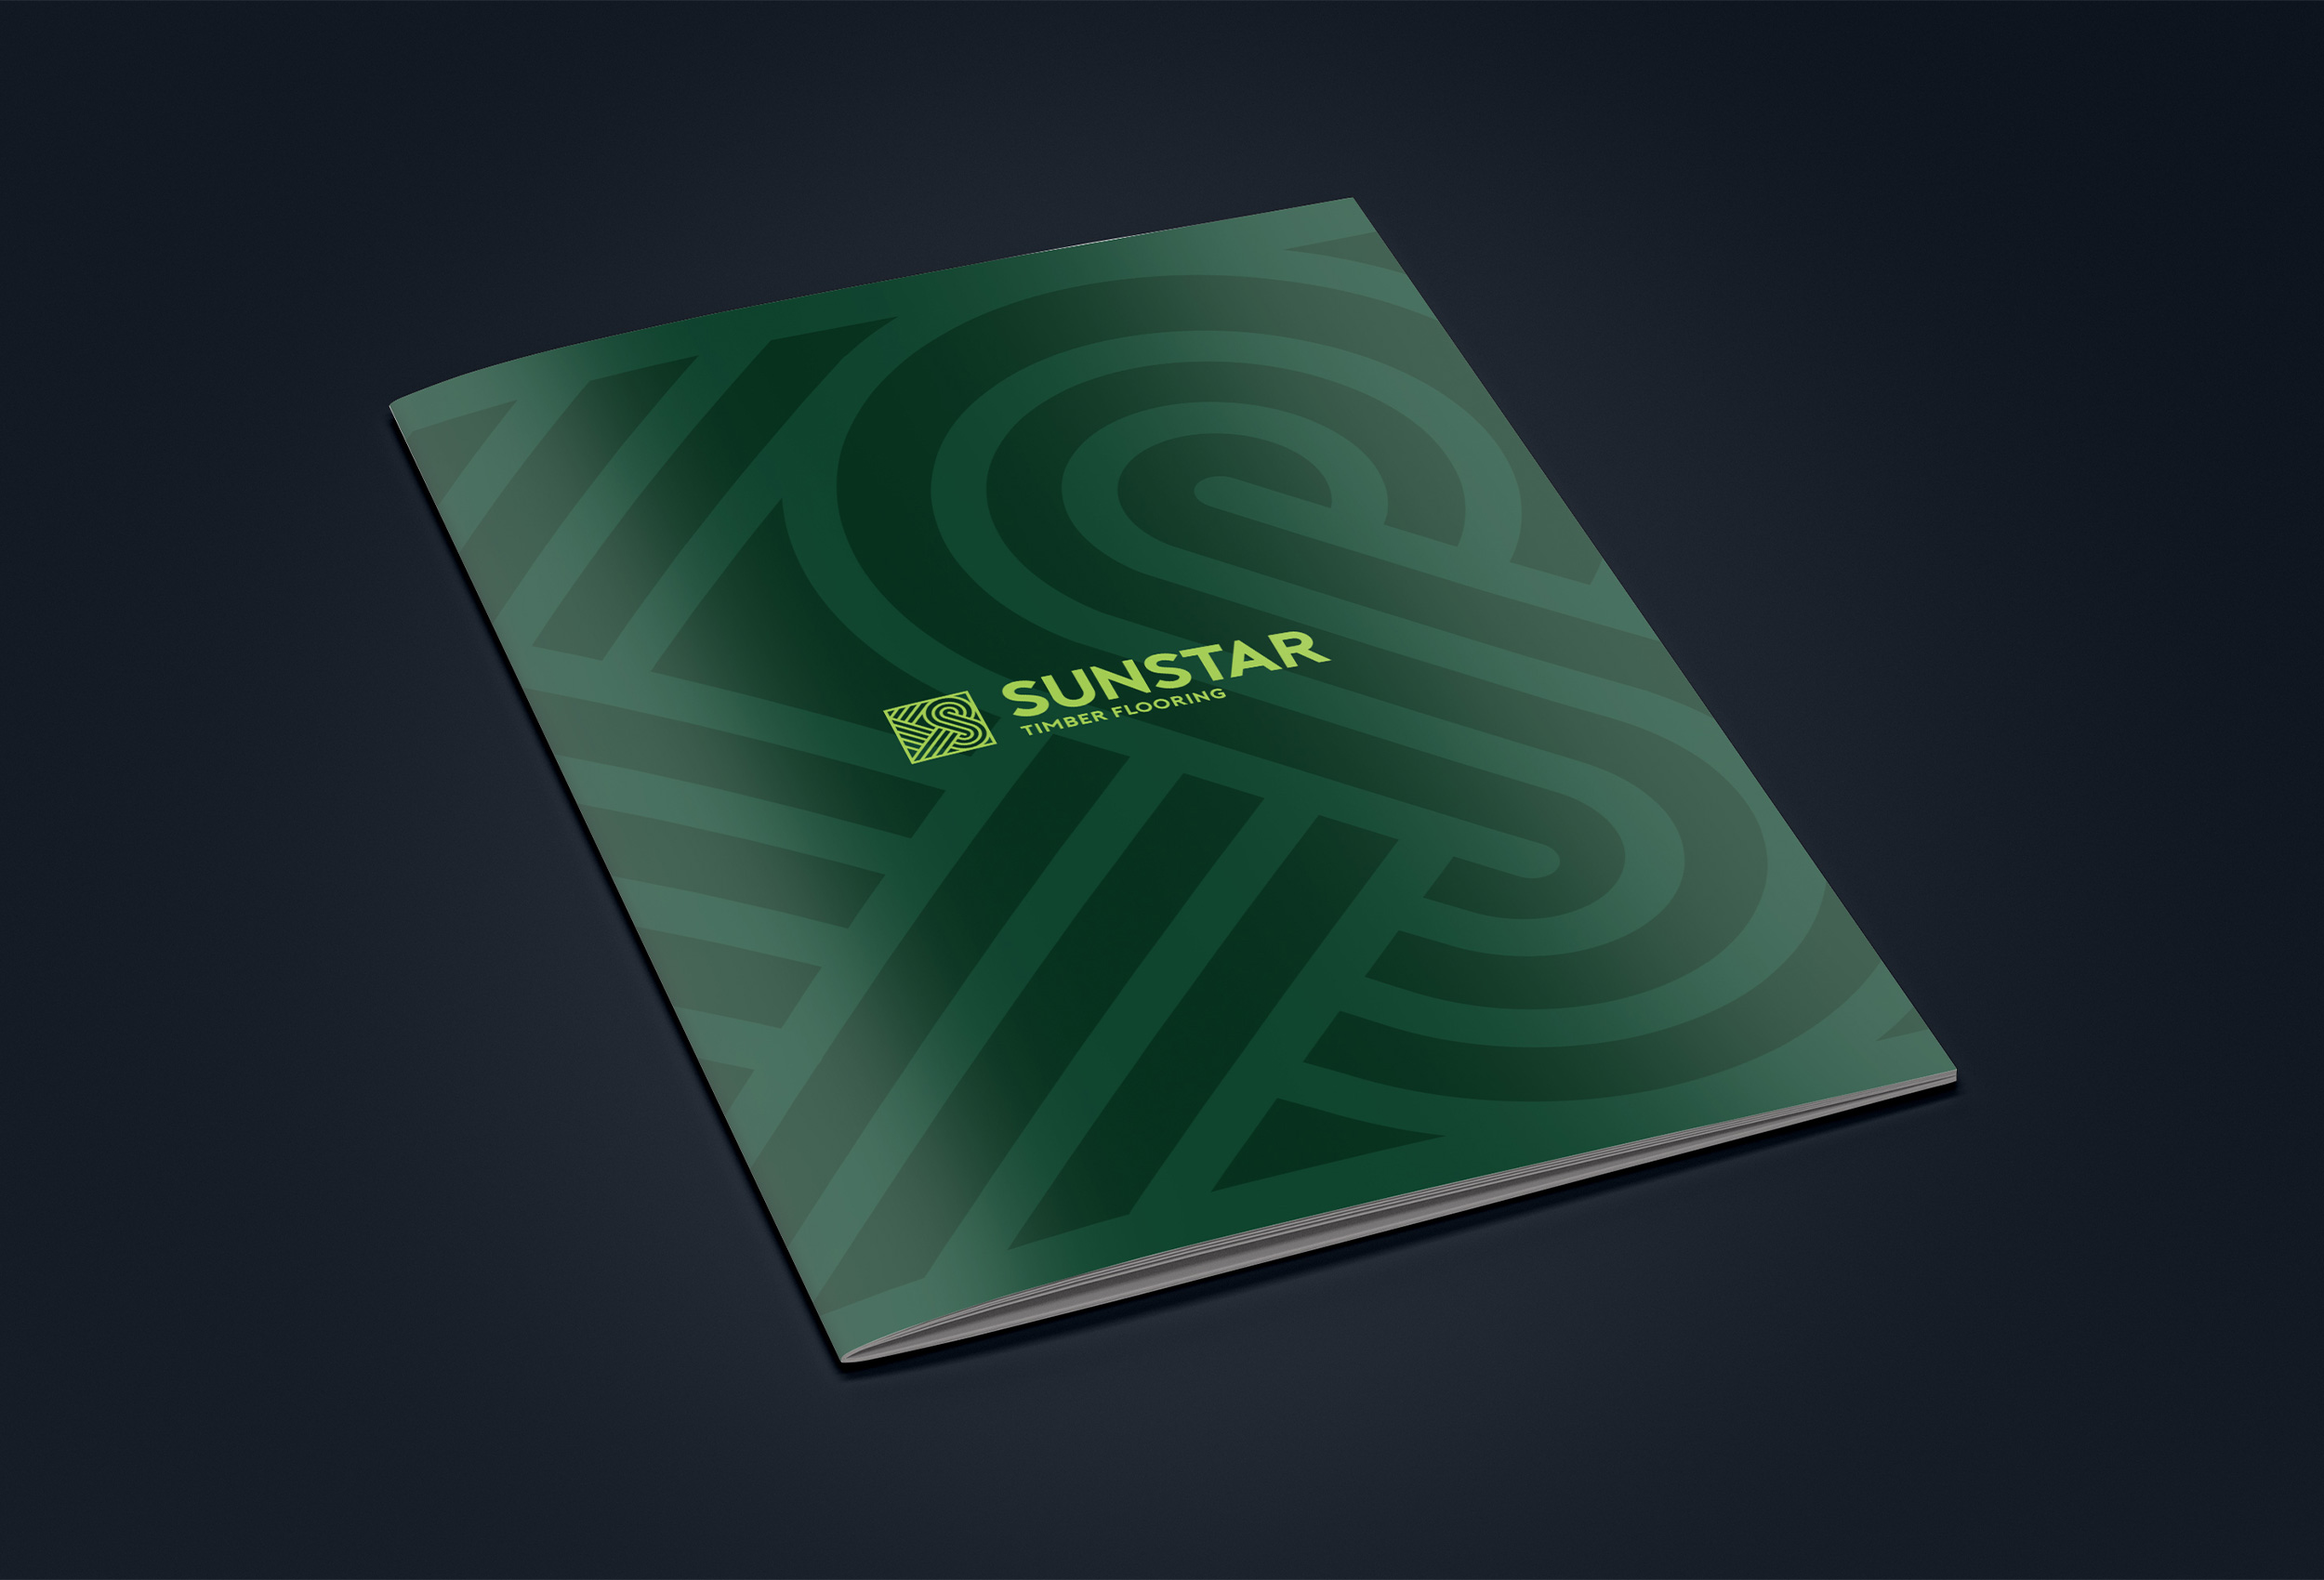 Sunstar product brochure cover design